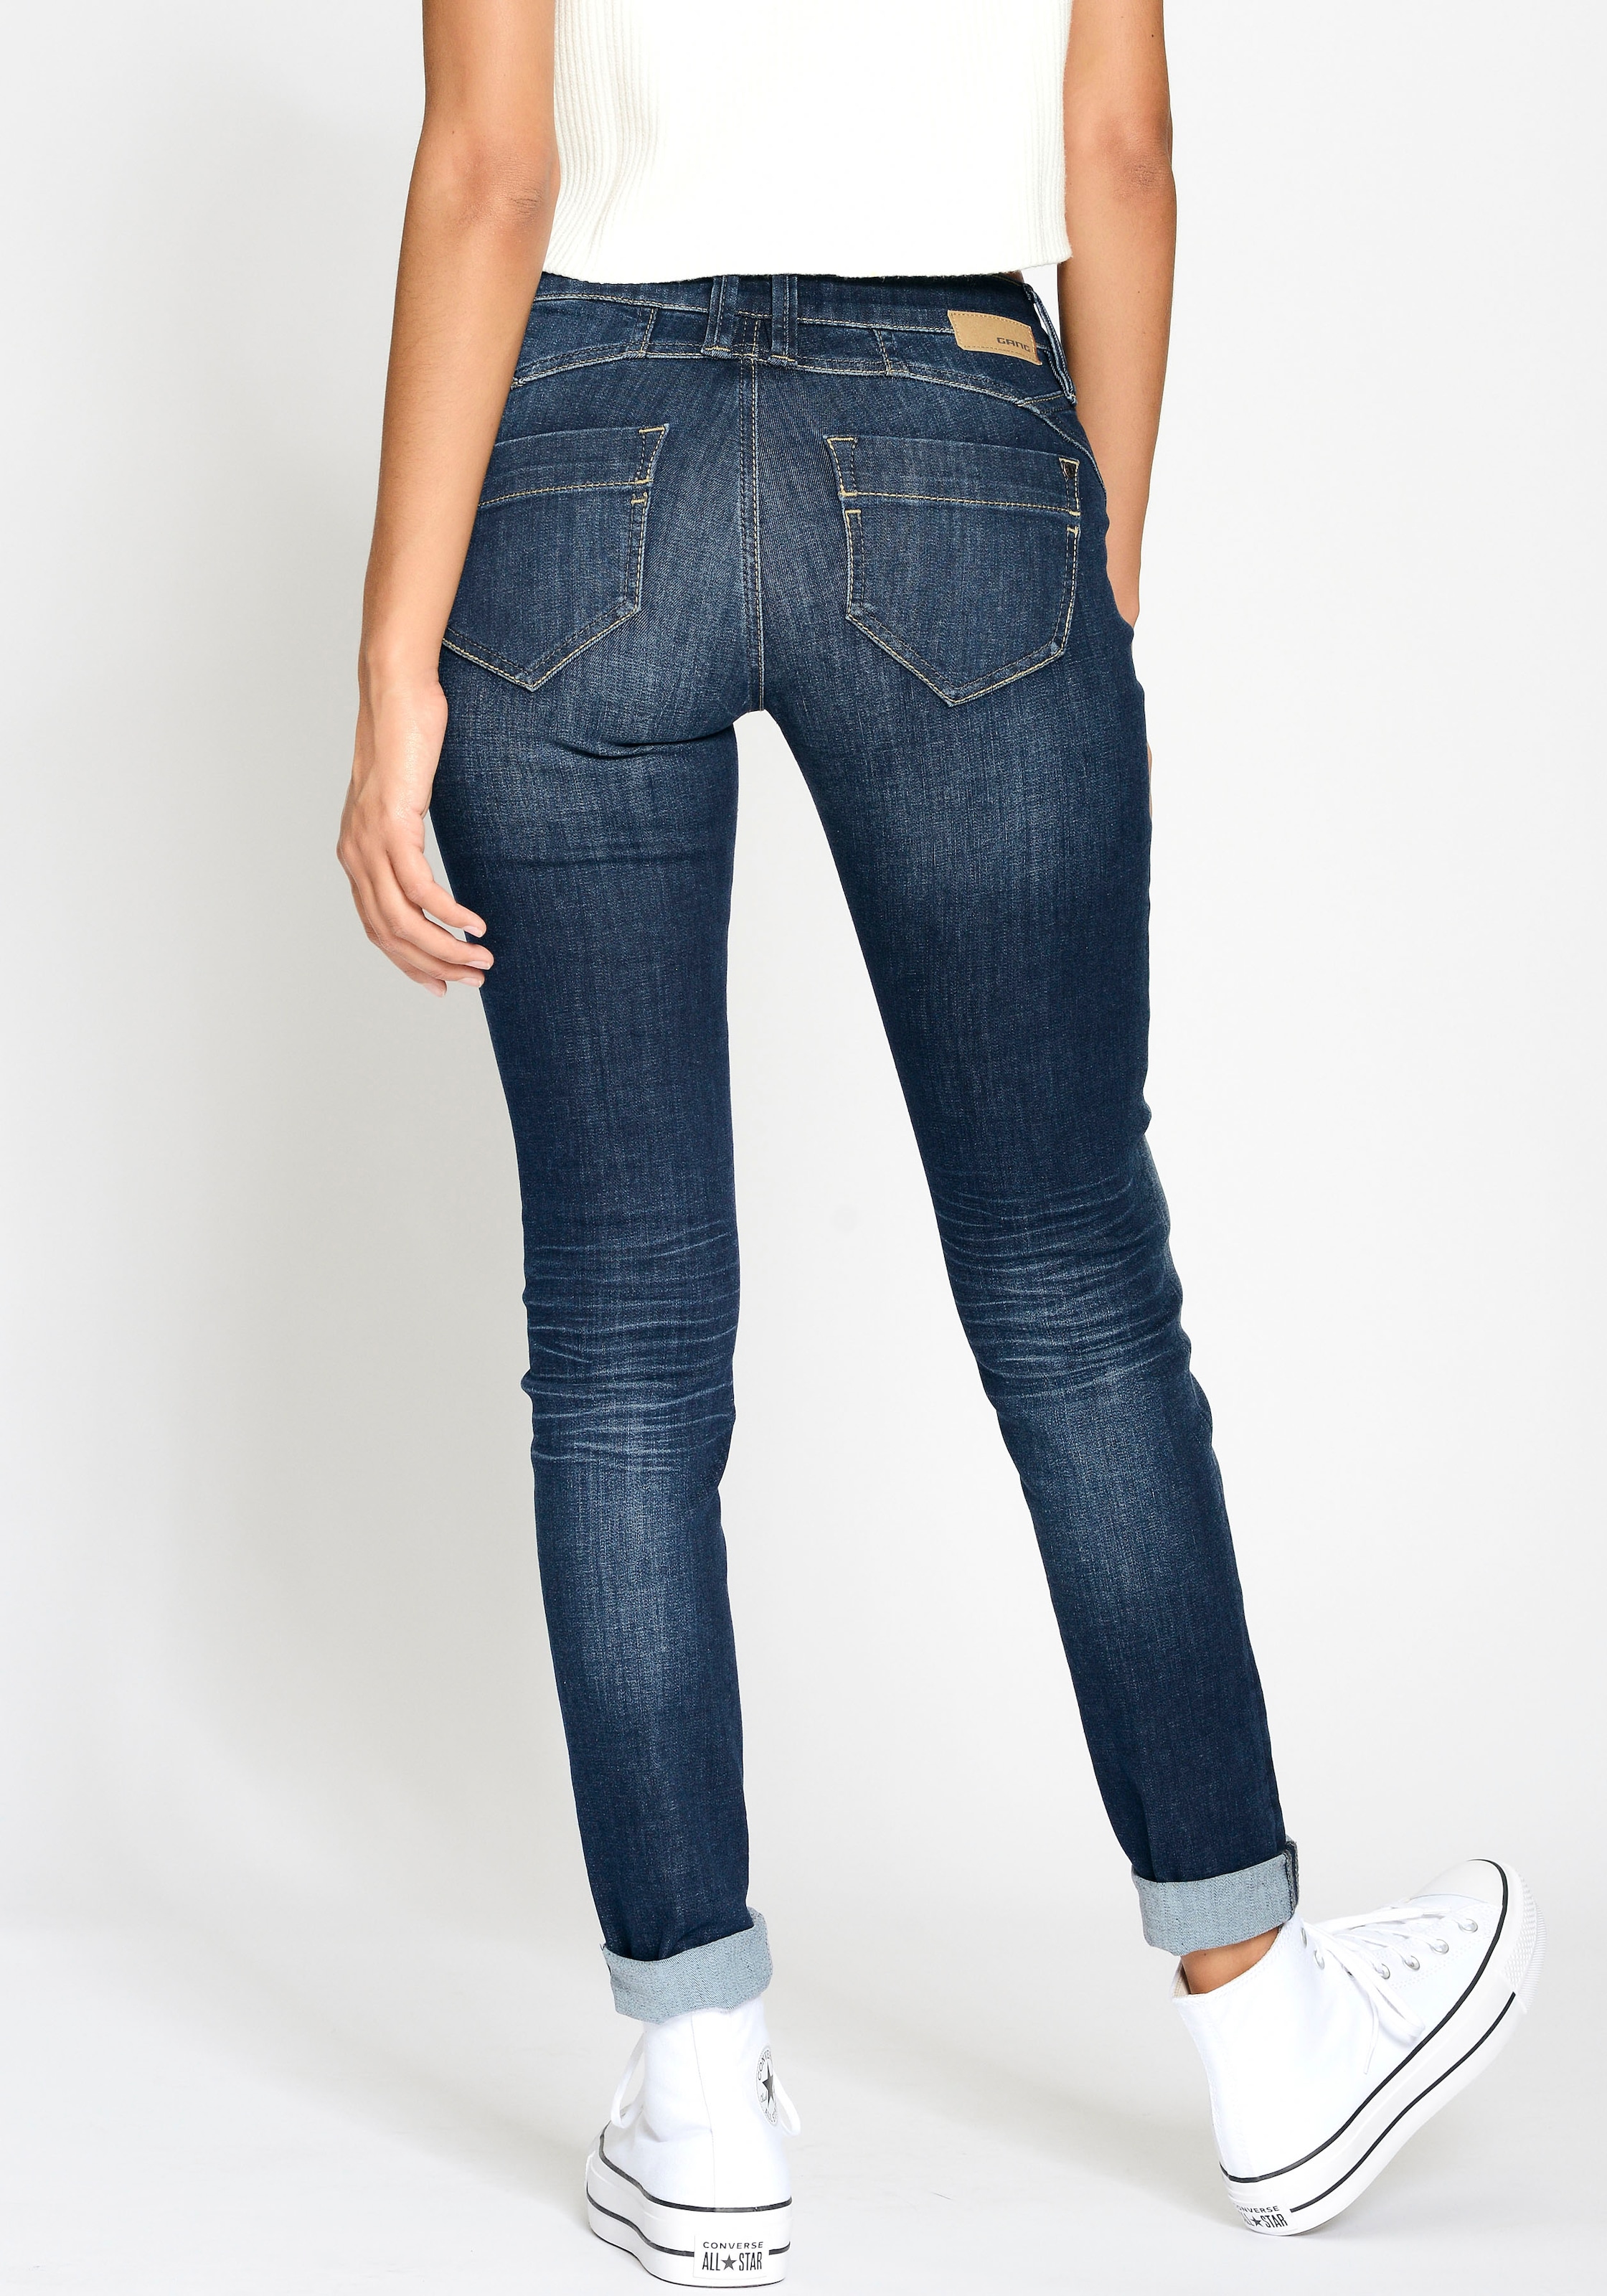 Elasthan-Anteil Skinny-fit-Jeans online kaufen mit BAUR GANG »NENA« |